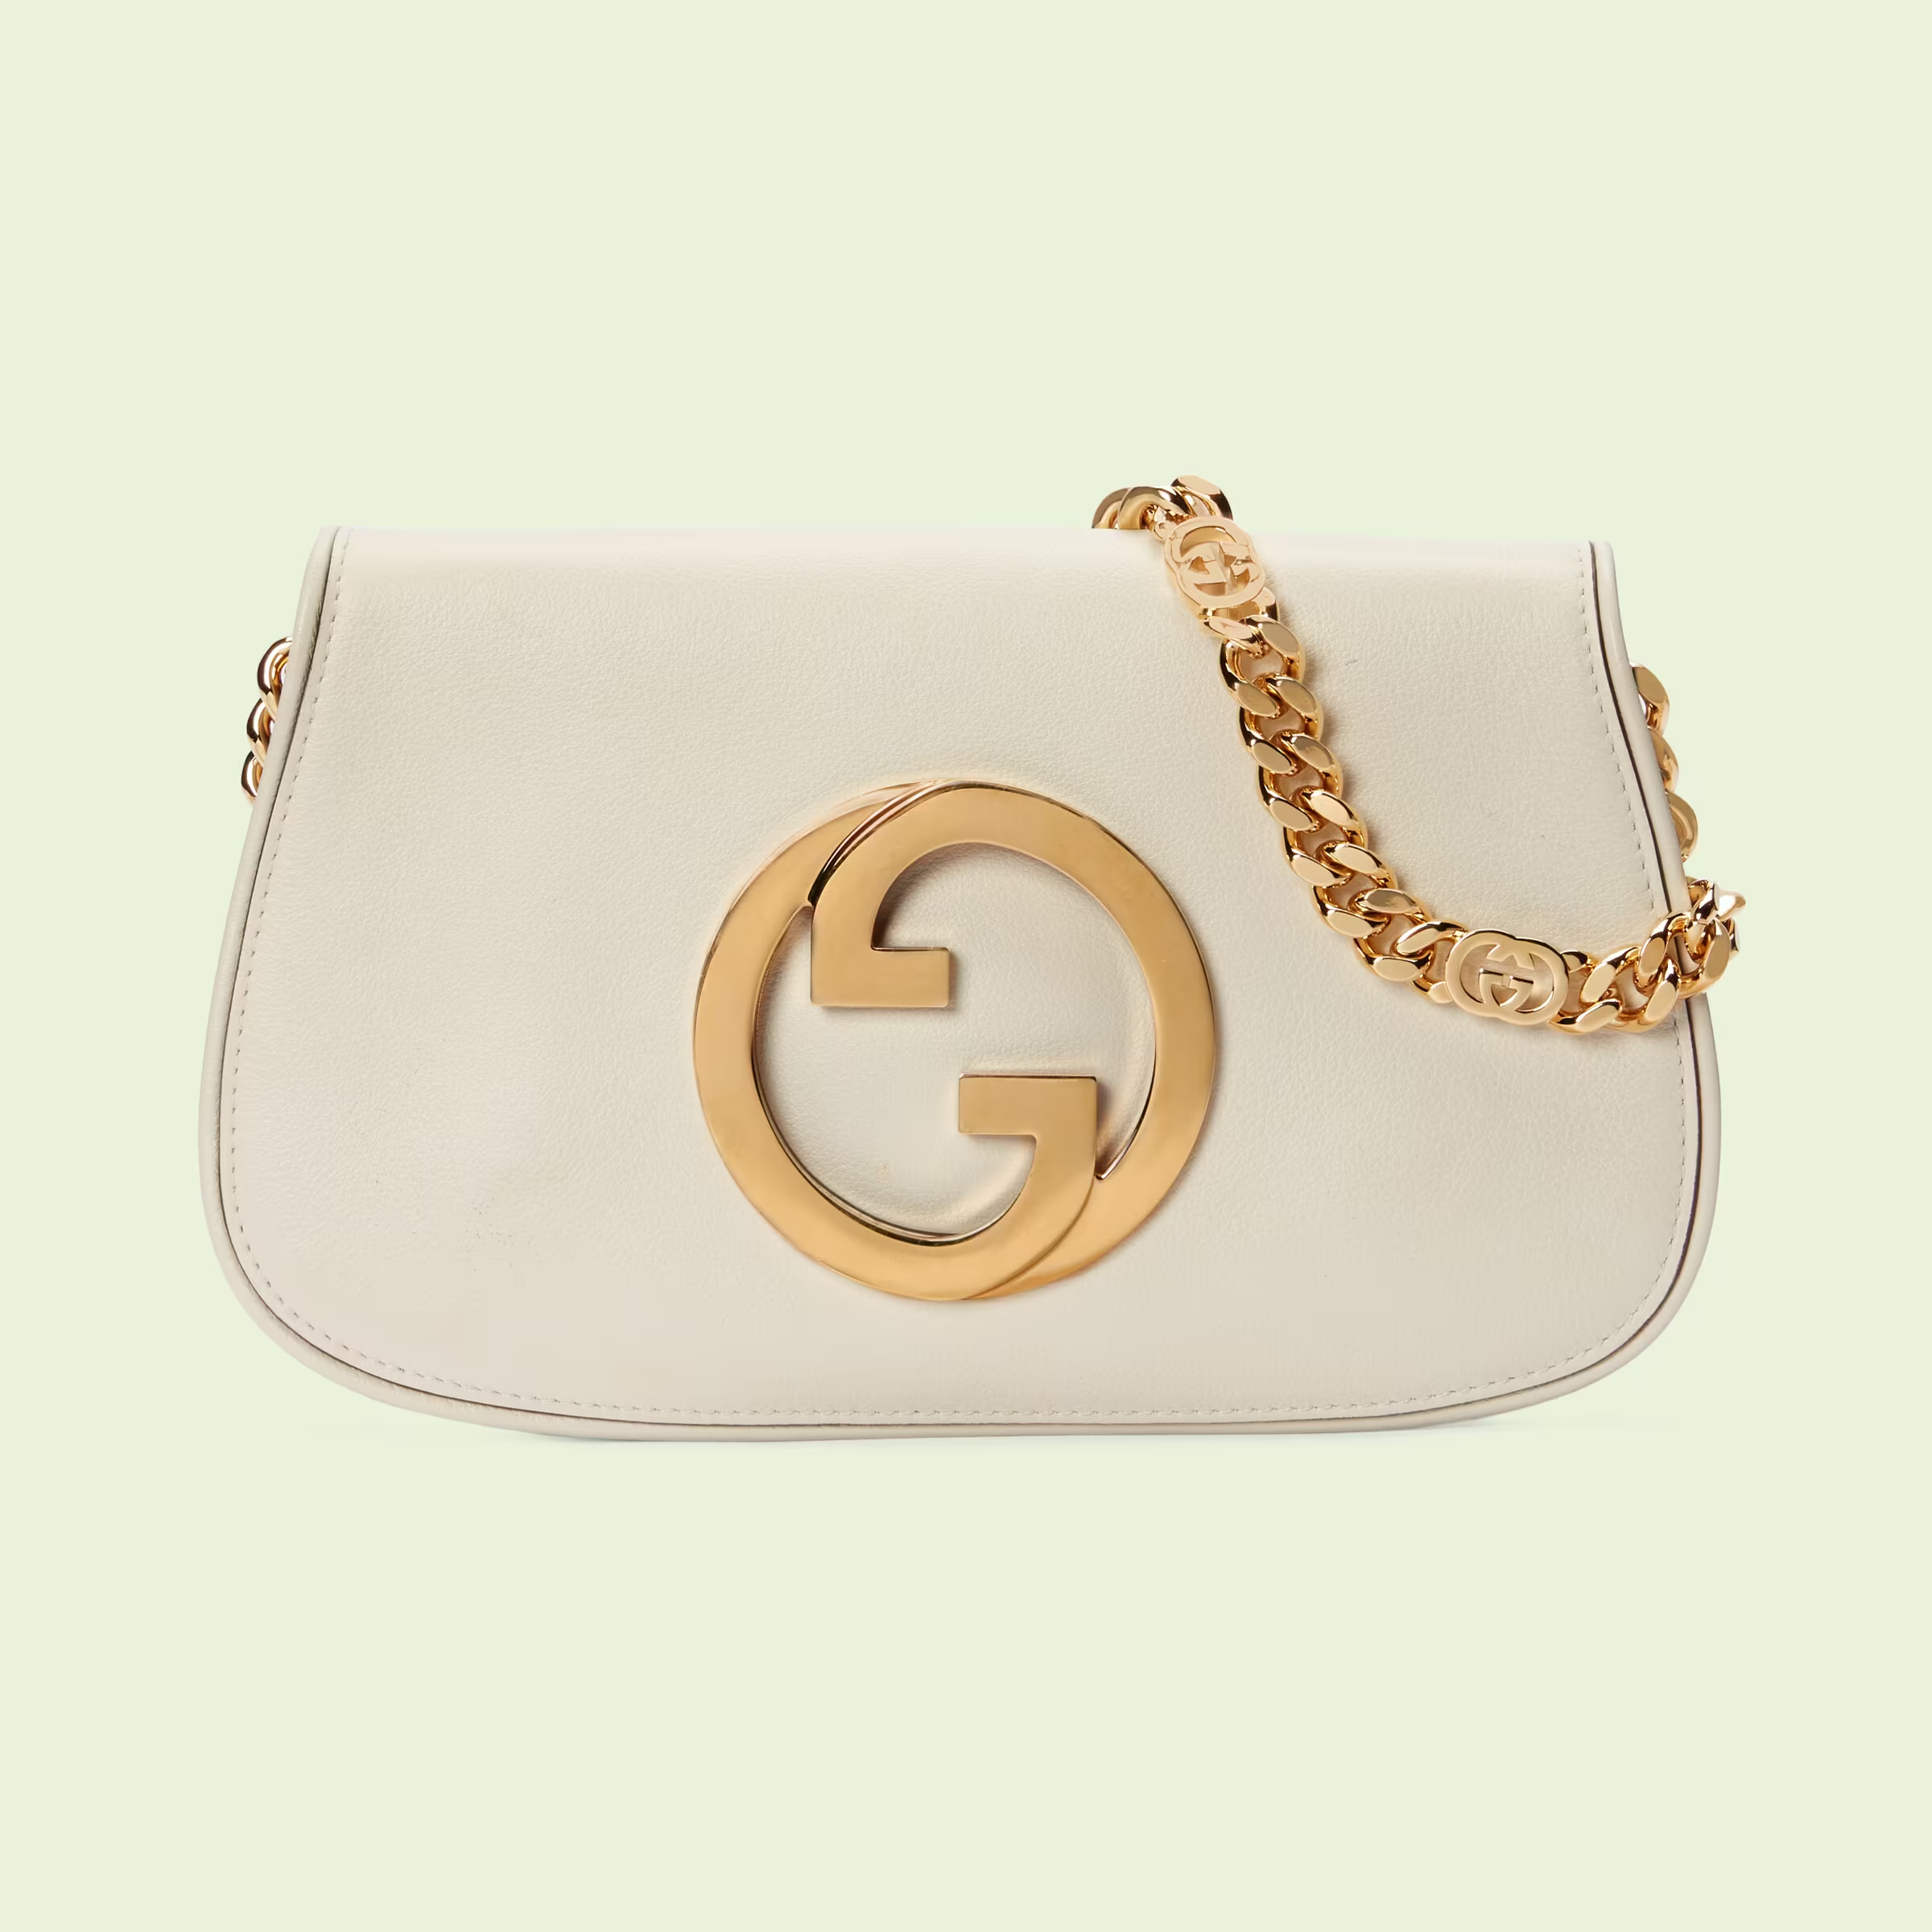 RESELL VALUE UP TO 70-80%‼️ #lbiteluxury #luxury #brandedbags